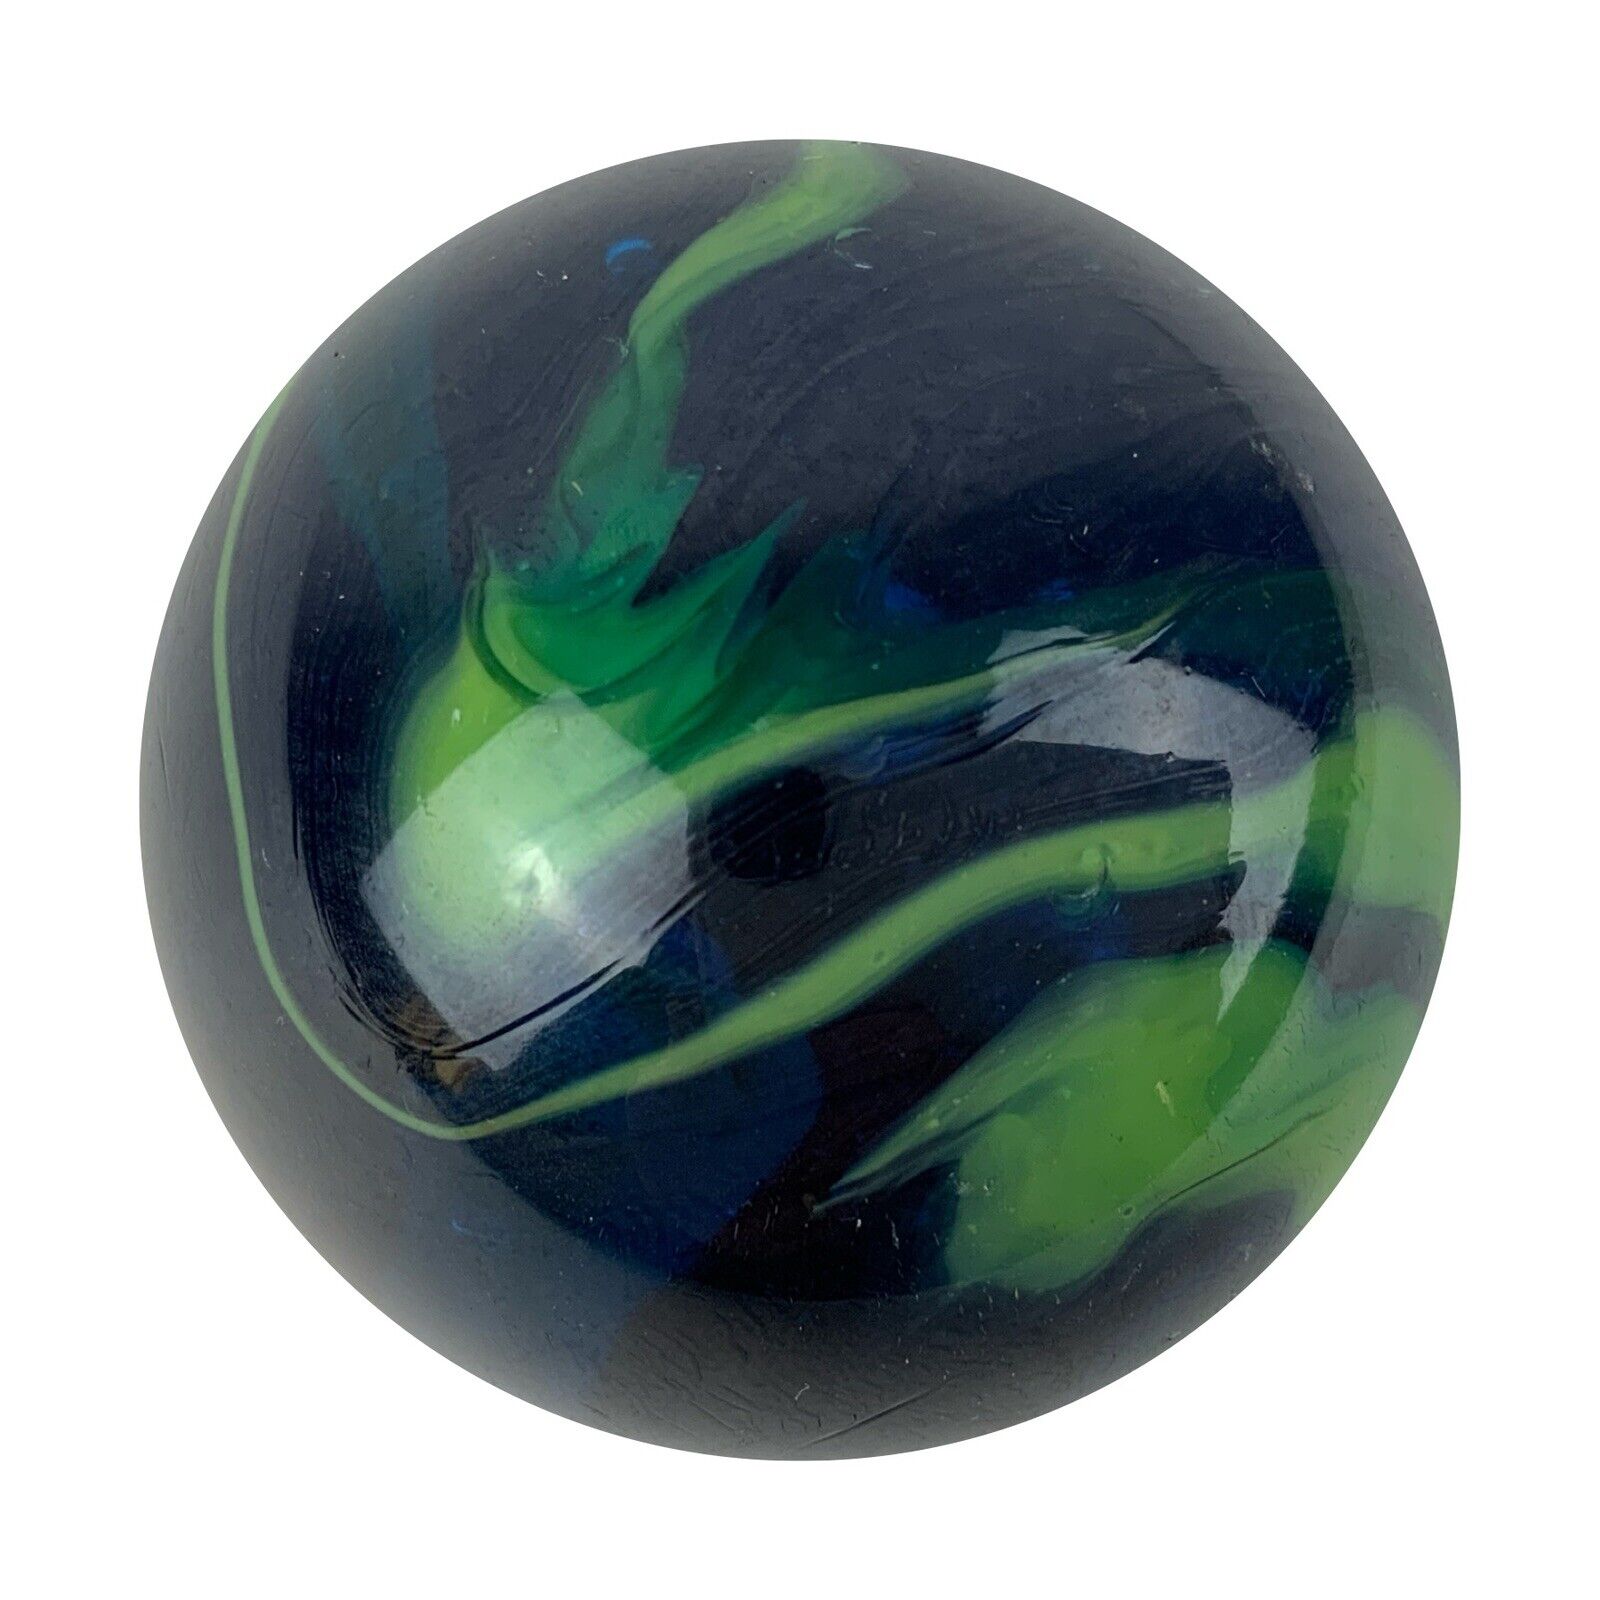 TOE BREAKER 50mm (2") SEA TURTLE clear Blue/Green Marbles glass ball HUGE Swirl Vacor Does Not Apply - фотография #7